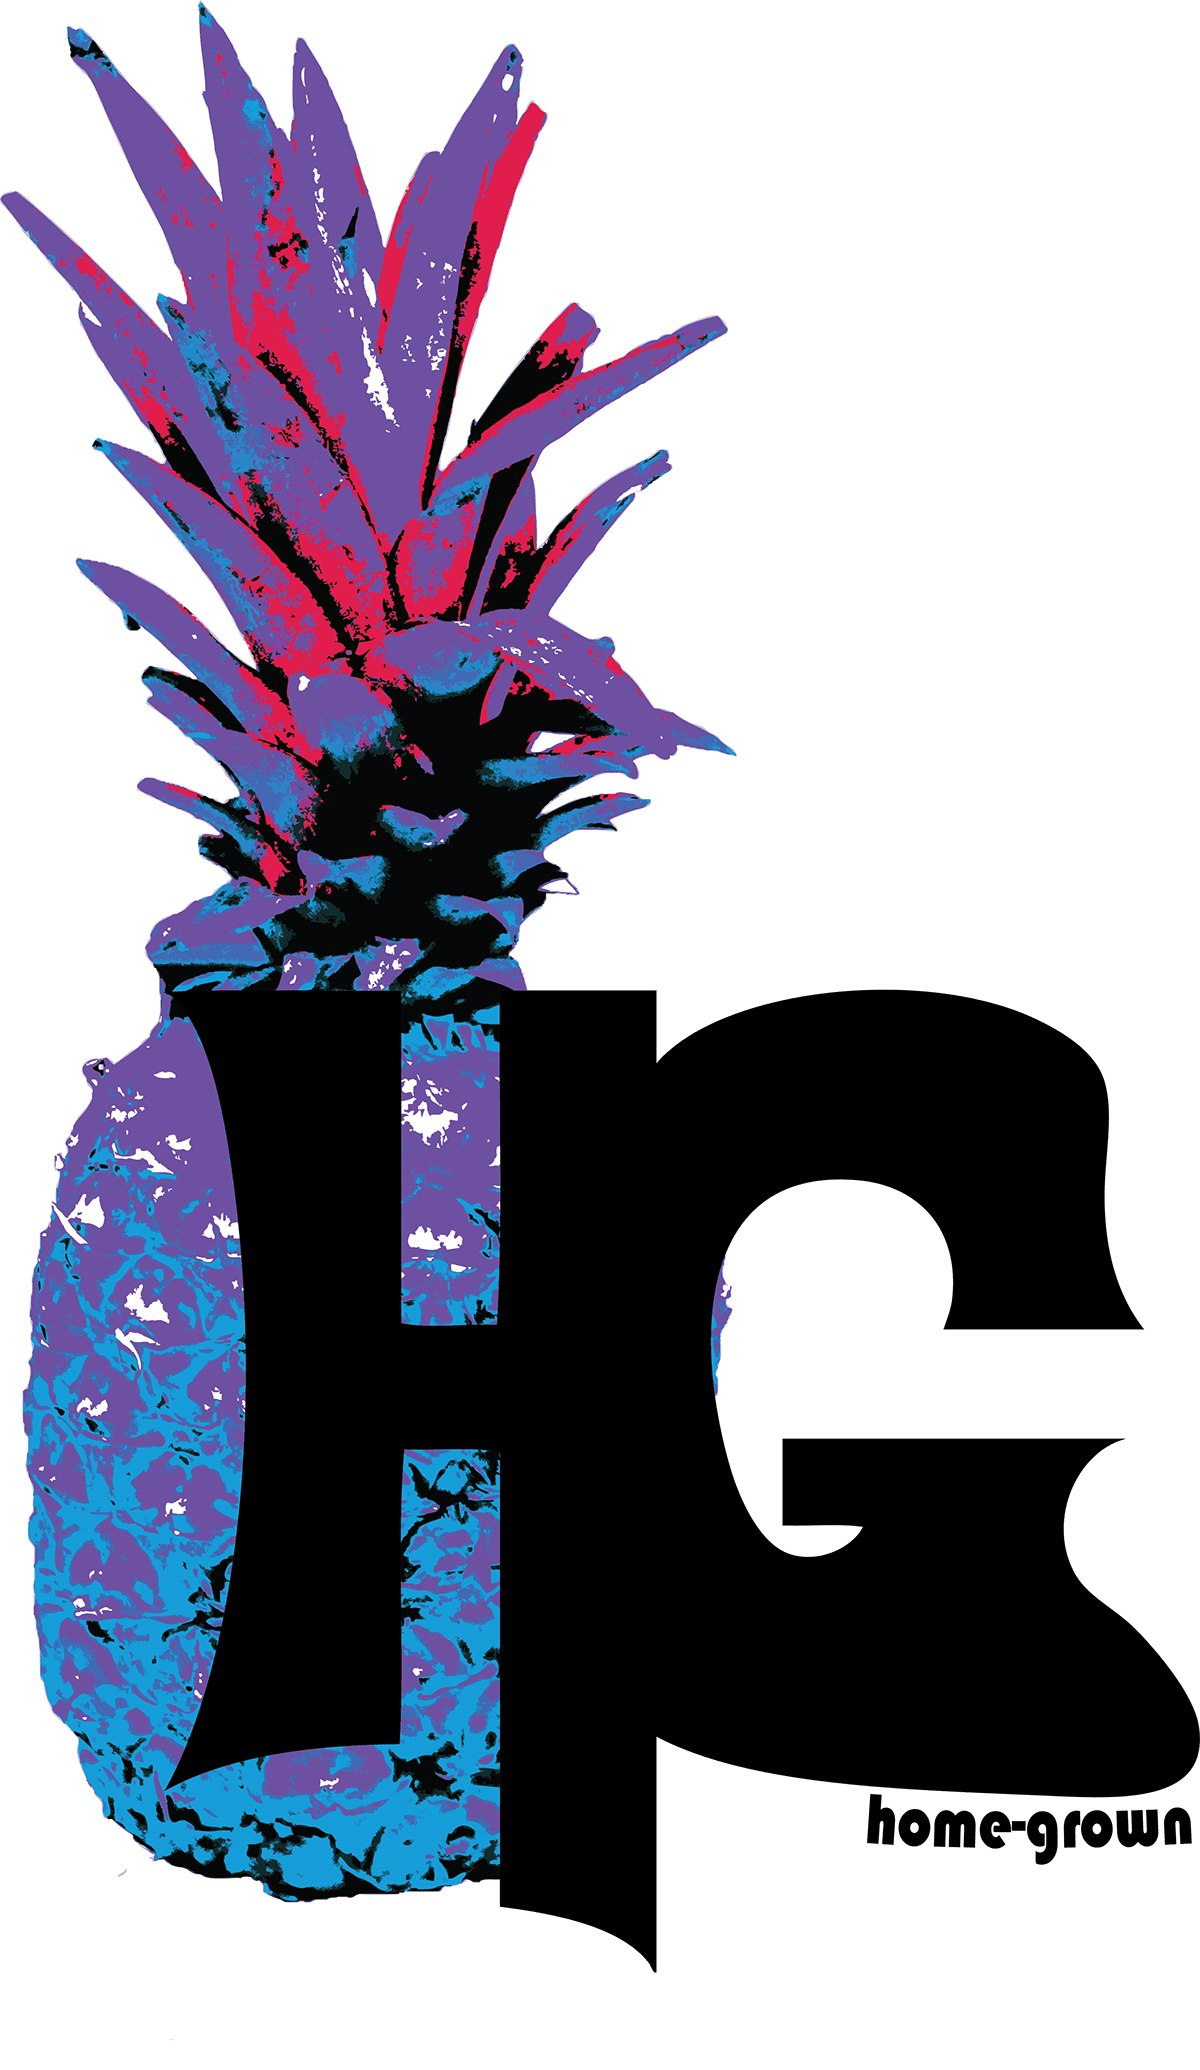 band logo Pineapple home-grown band logo